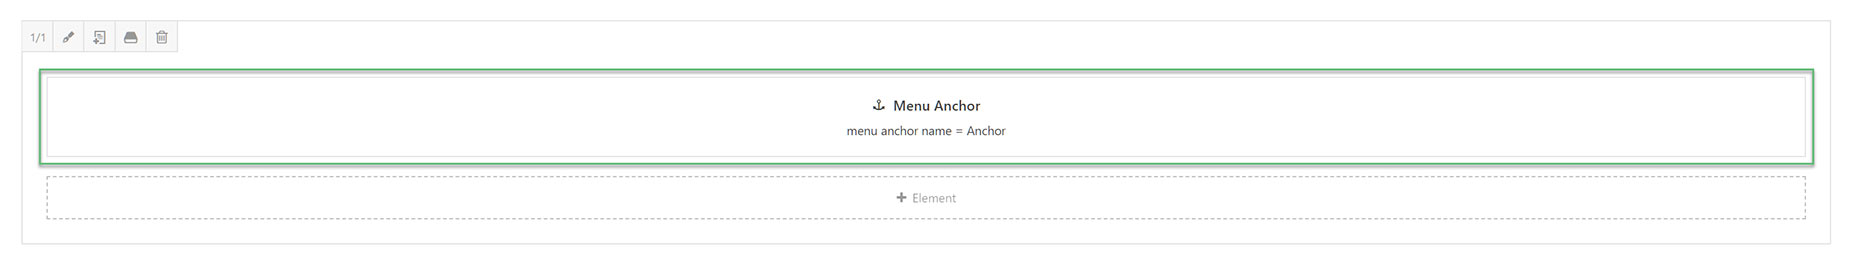 The Menu Anchor Element in a 1/1 Column